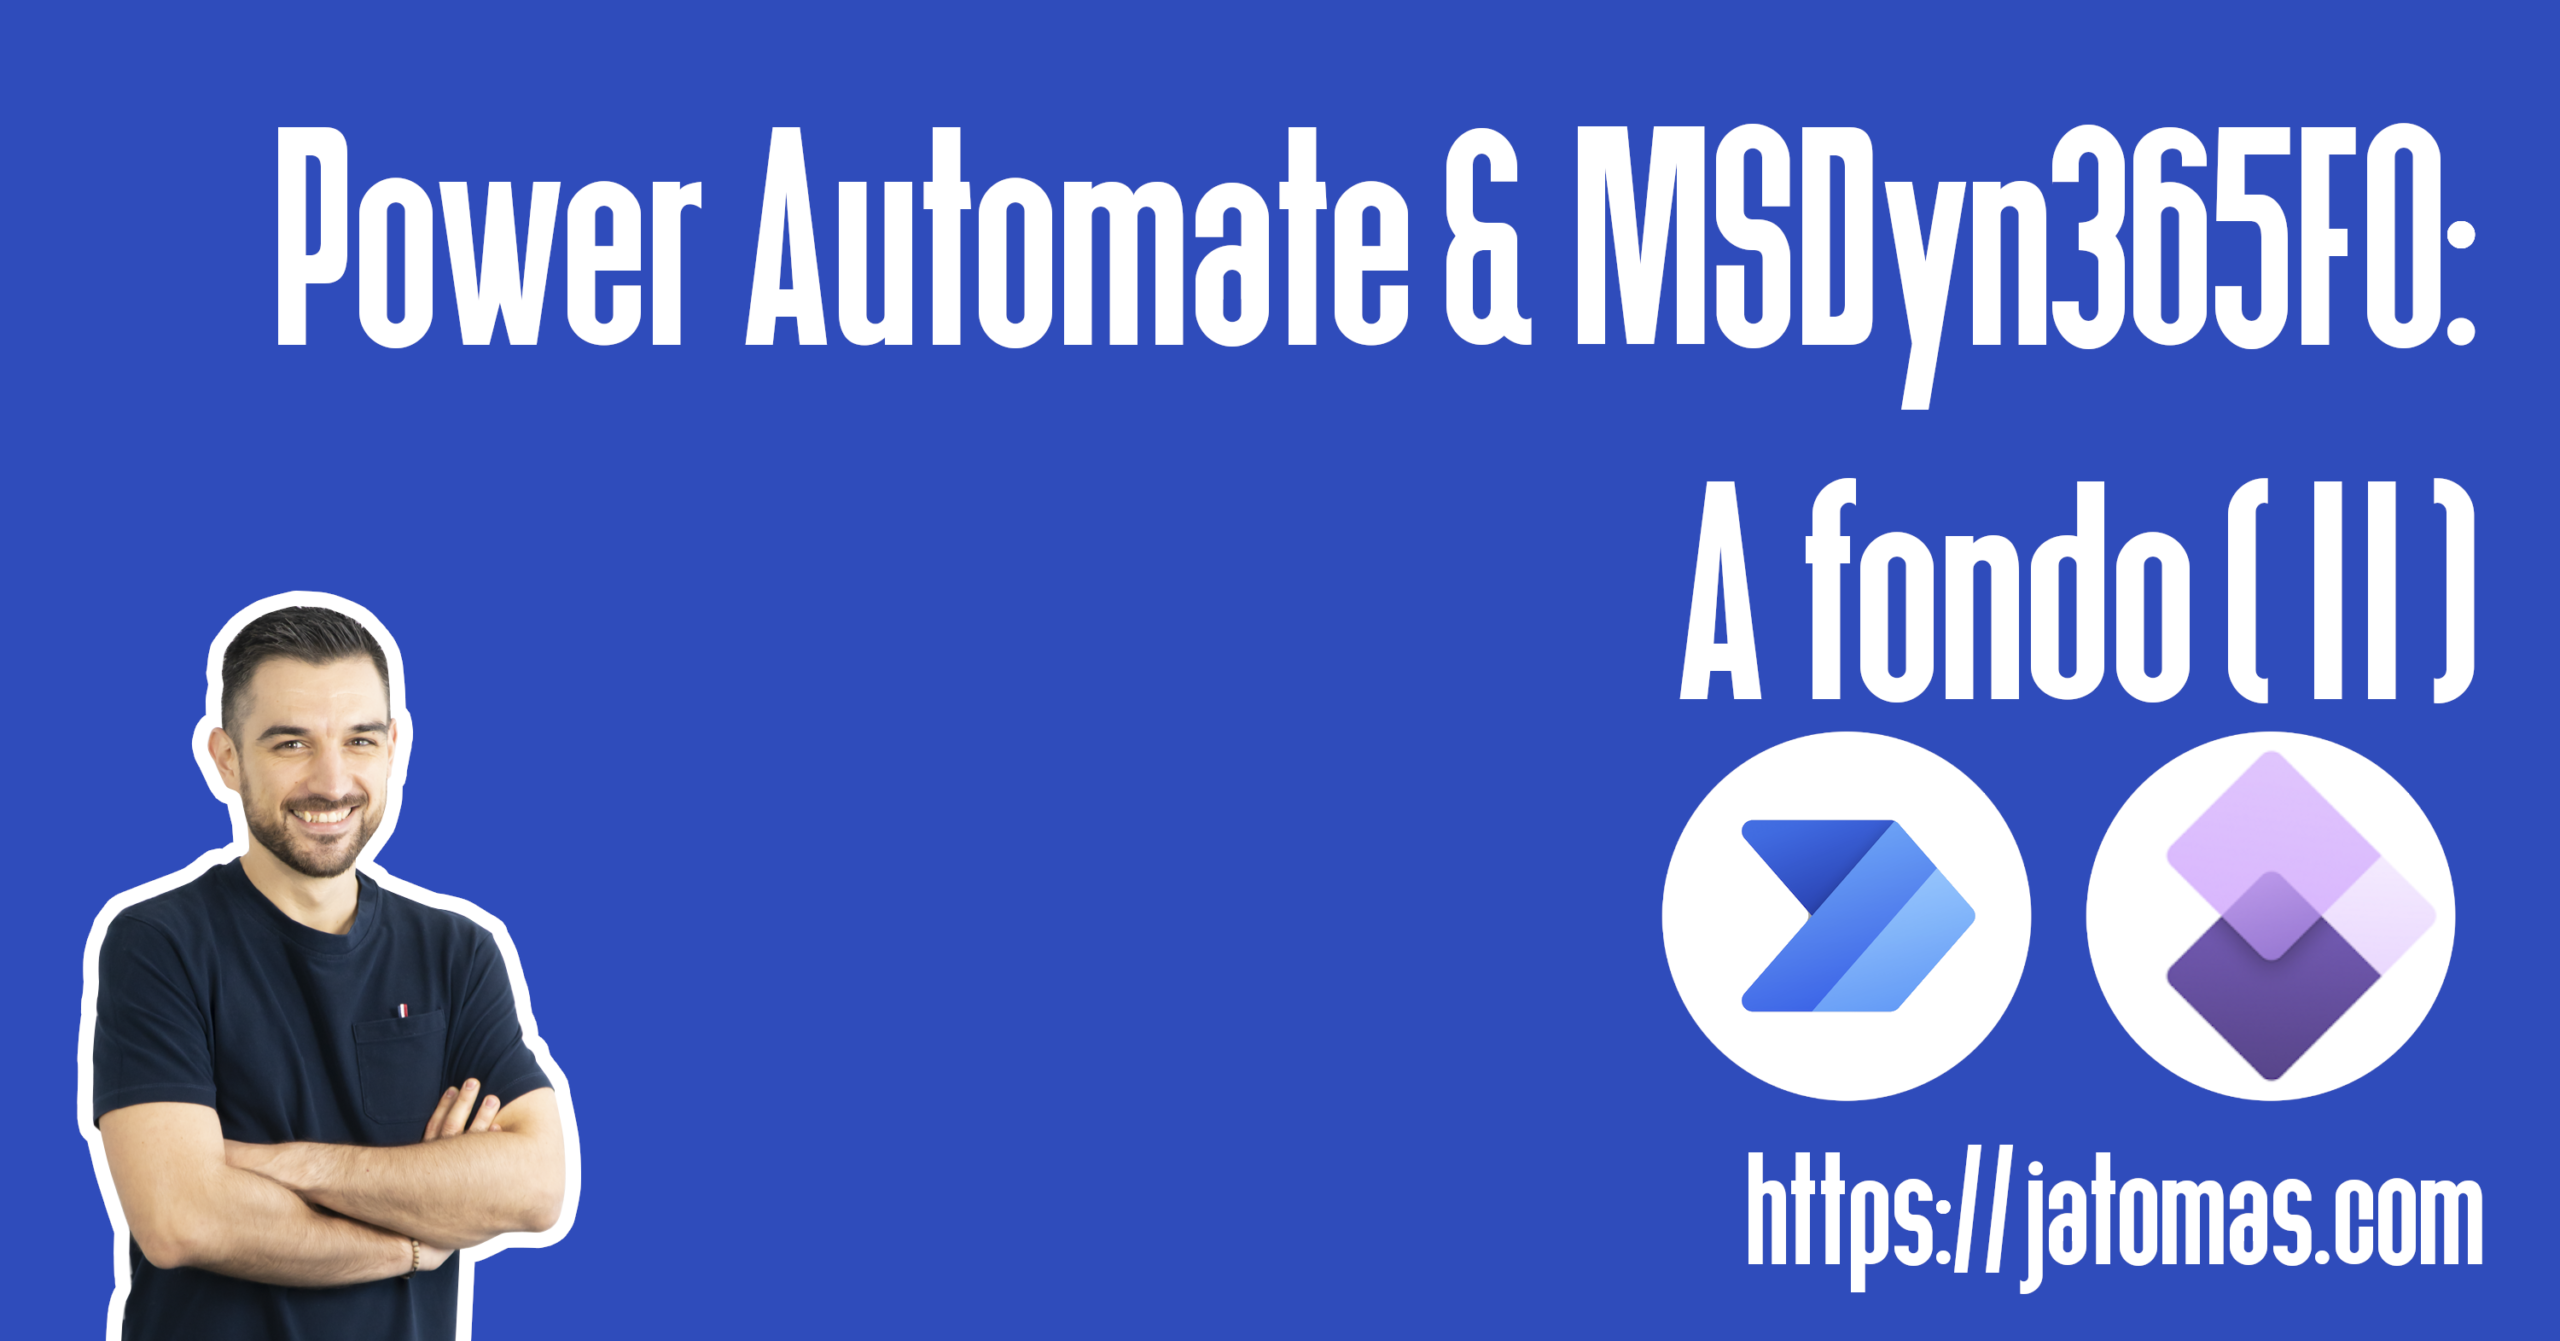 Power Automate & MSDyn365FO: A fondo (II)